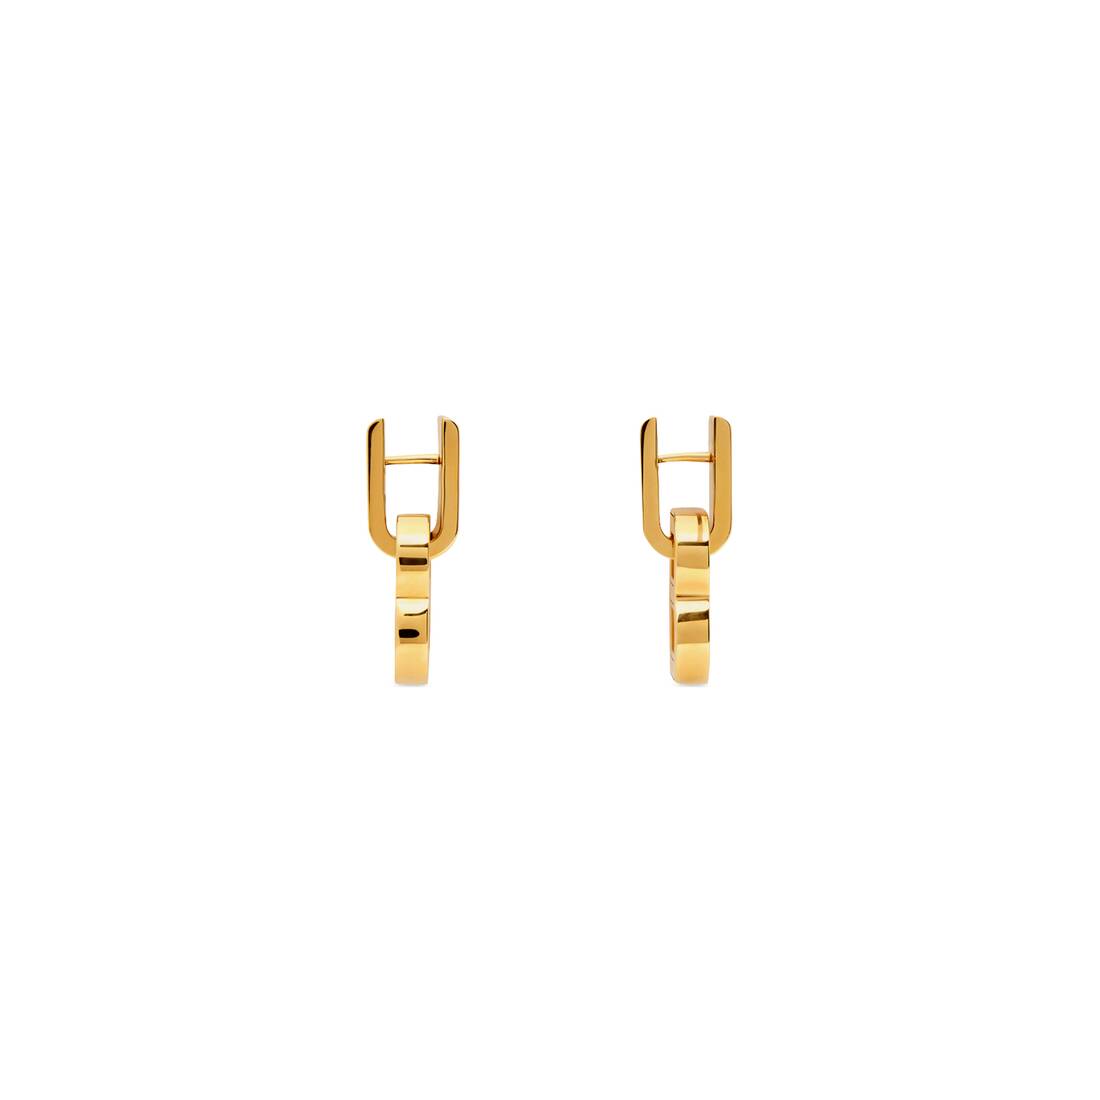 Earrings Balenciaga Gold in Other - 27668454